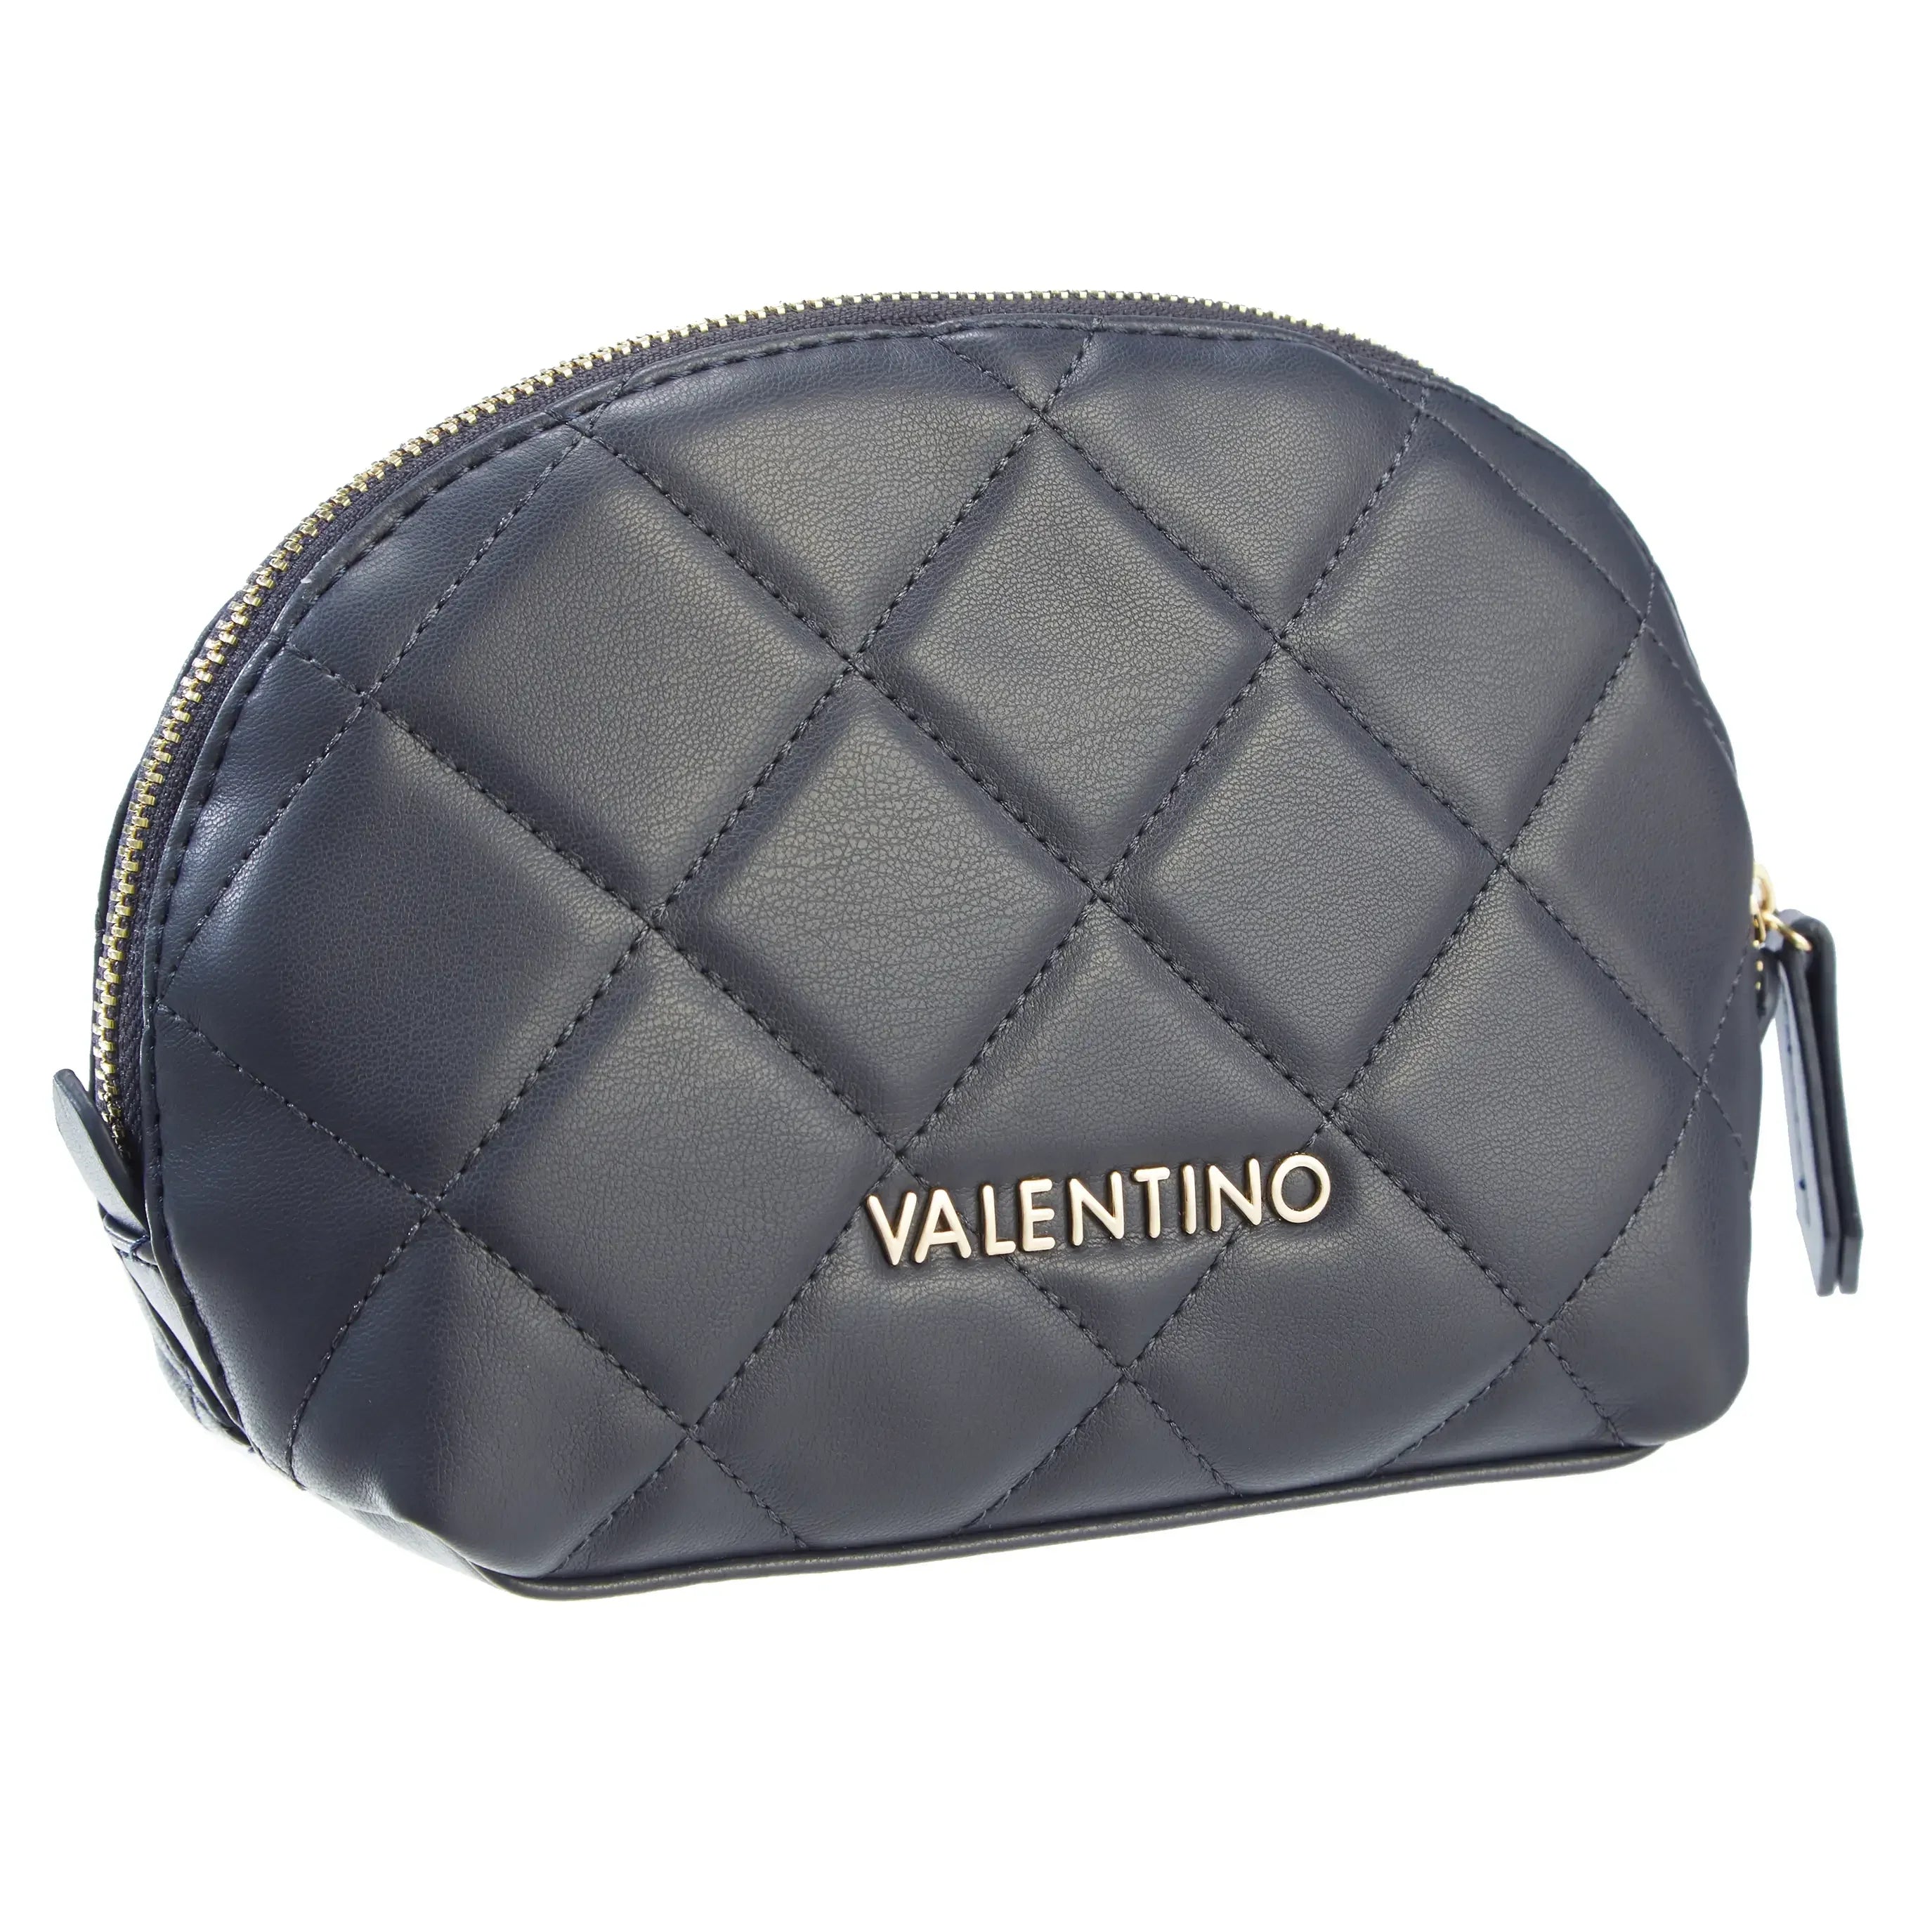 Valentino Bags Ocarina cosmetic bag 28 cm - Rosso